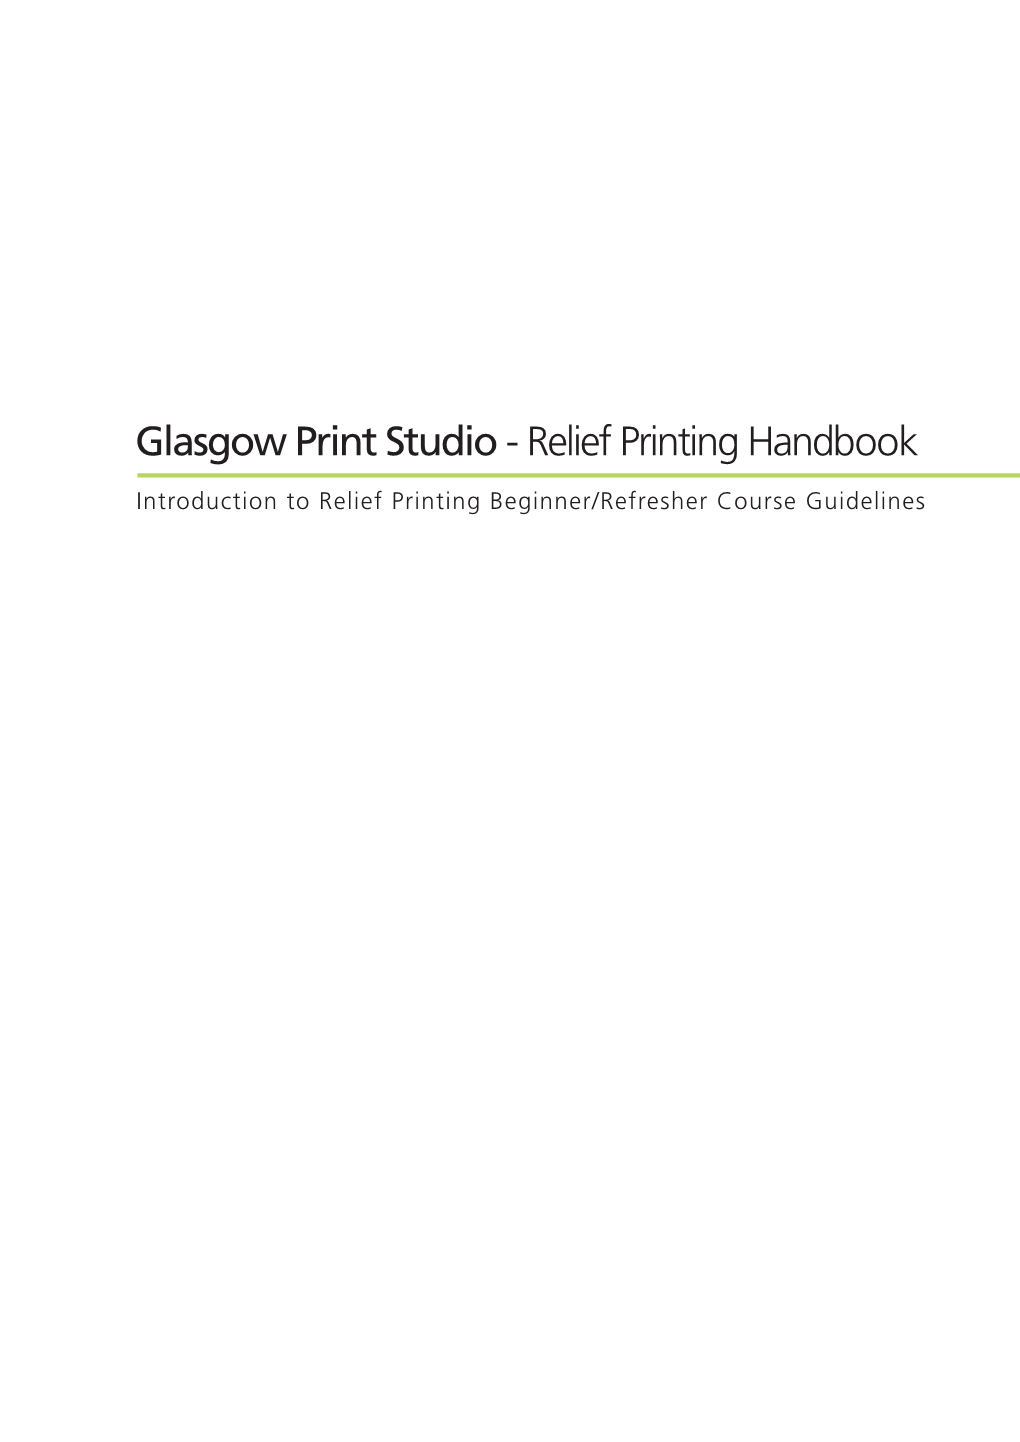 Relief Printing Handbook